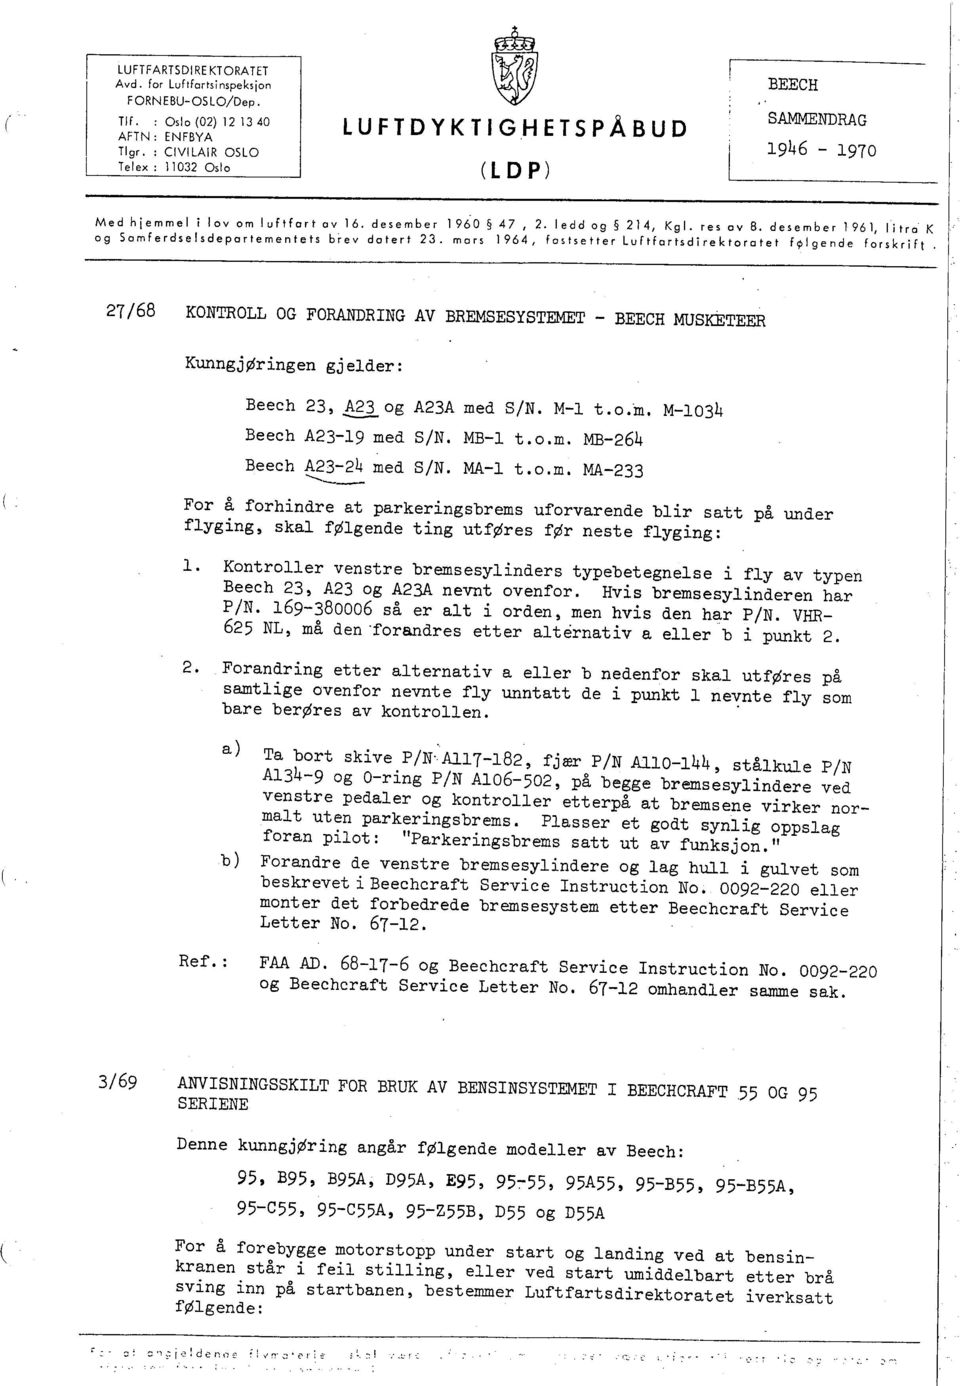 desember i 961, Iltr.o K og Samferdselsdepartementets brev datert 23. mars 1964, fastsetter Luftfartsdirektoratet fqilgende forskrift.